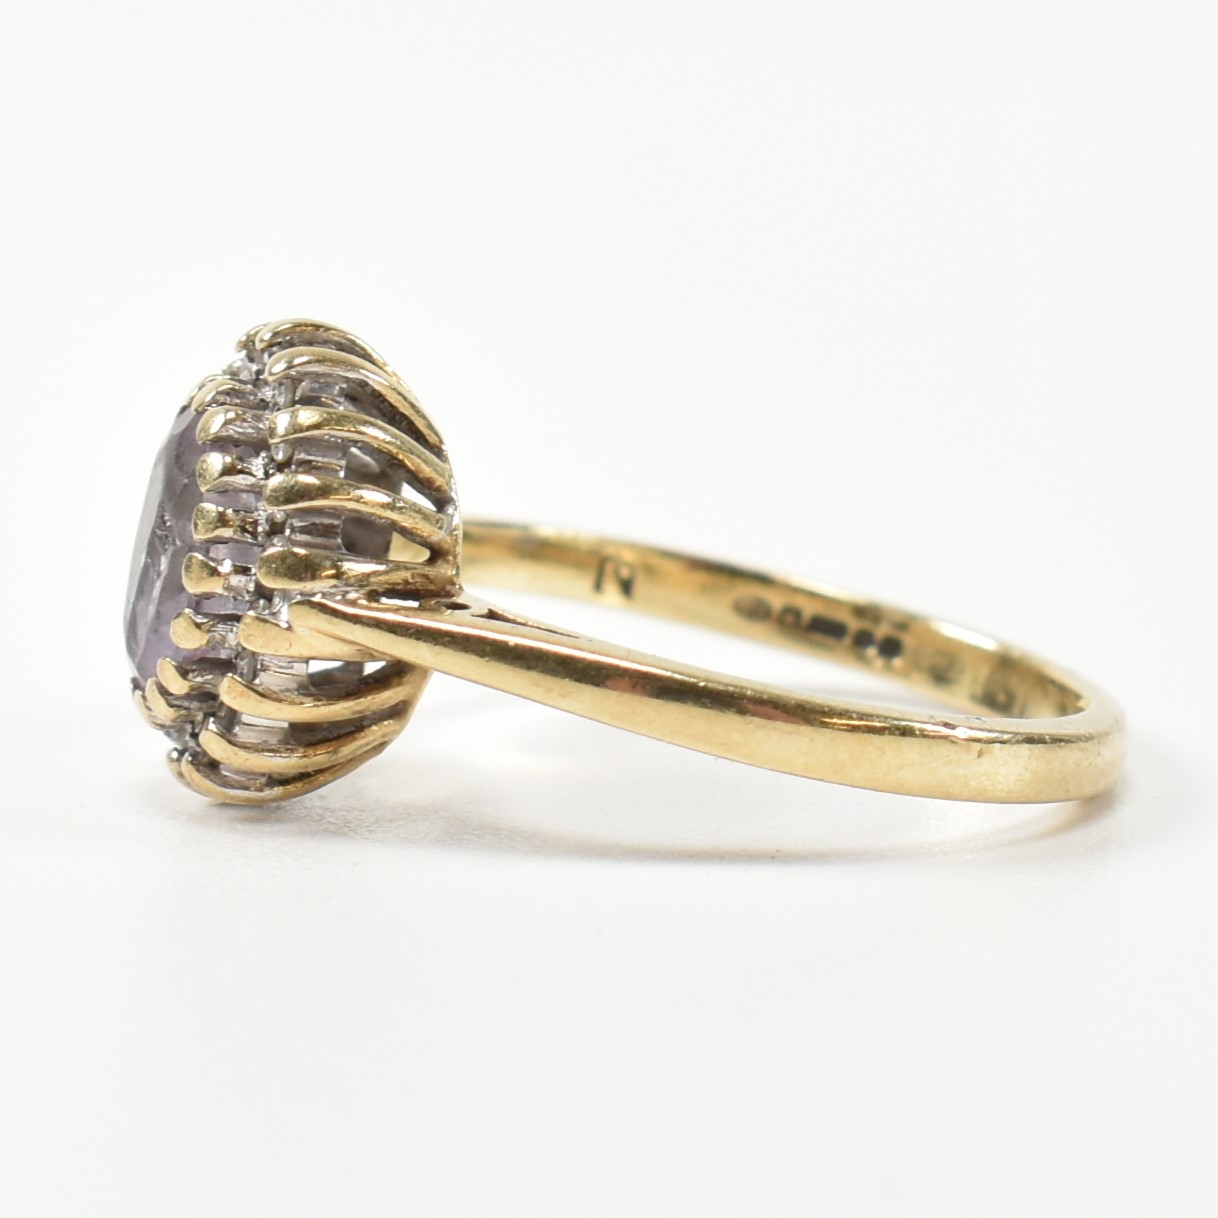 HALLMARKED 9CT GOLD DIAMOND & AMETHYST CLUSTER RING - Image 5 of 8